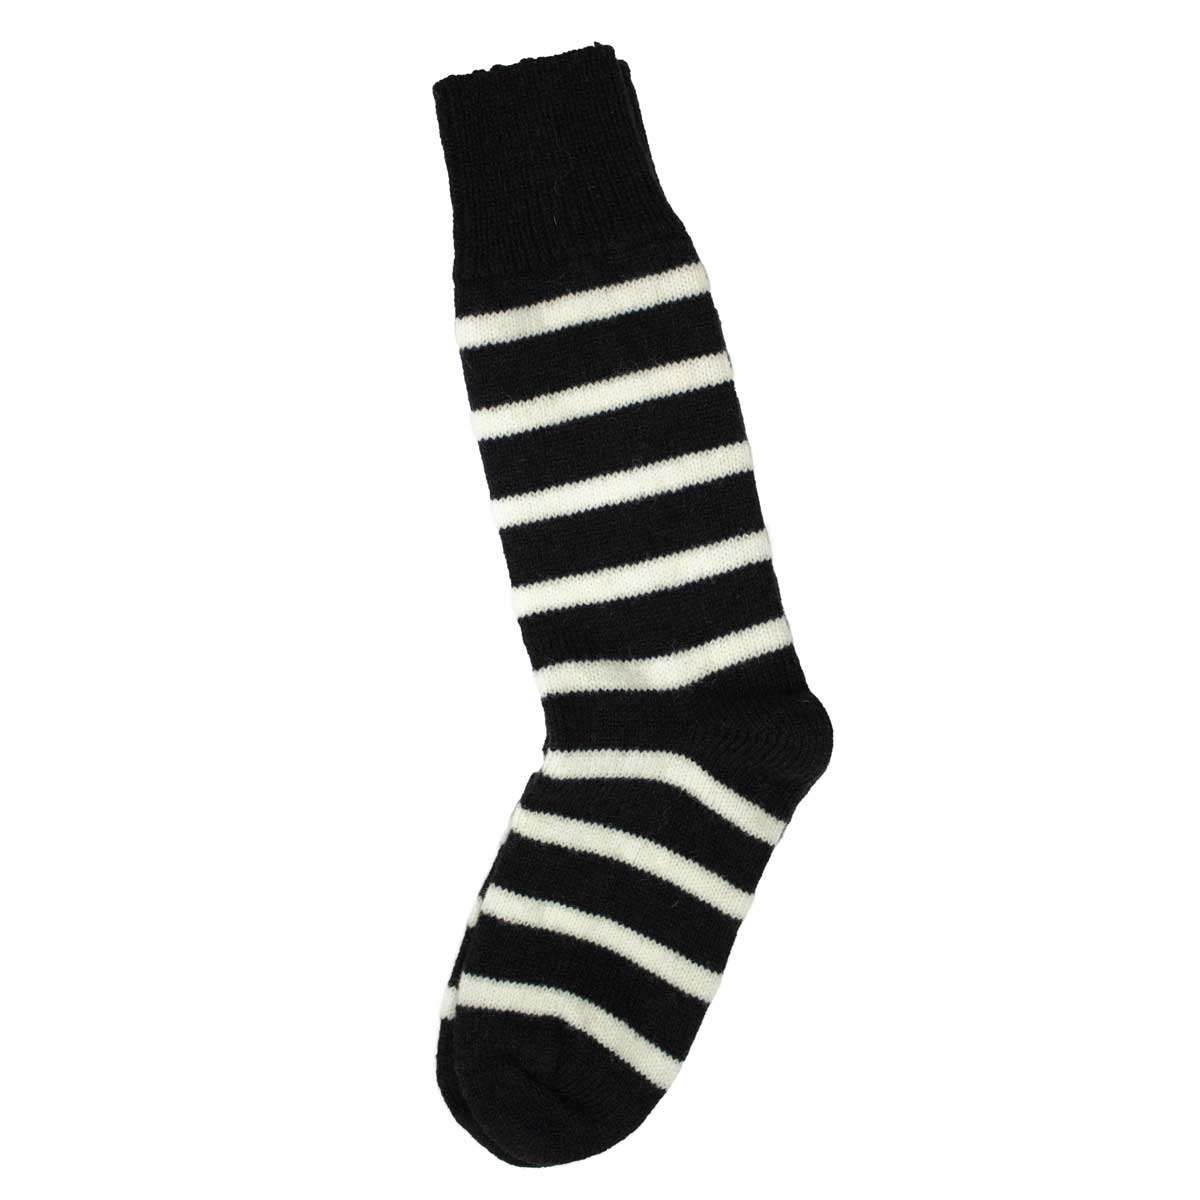 Bas de Famille | Wool socks Black & Cream | Made in Quebec | Local ...